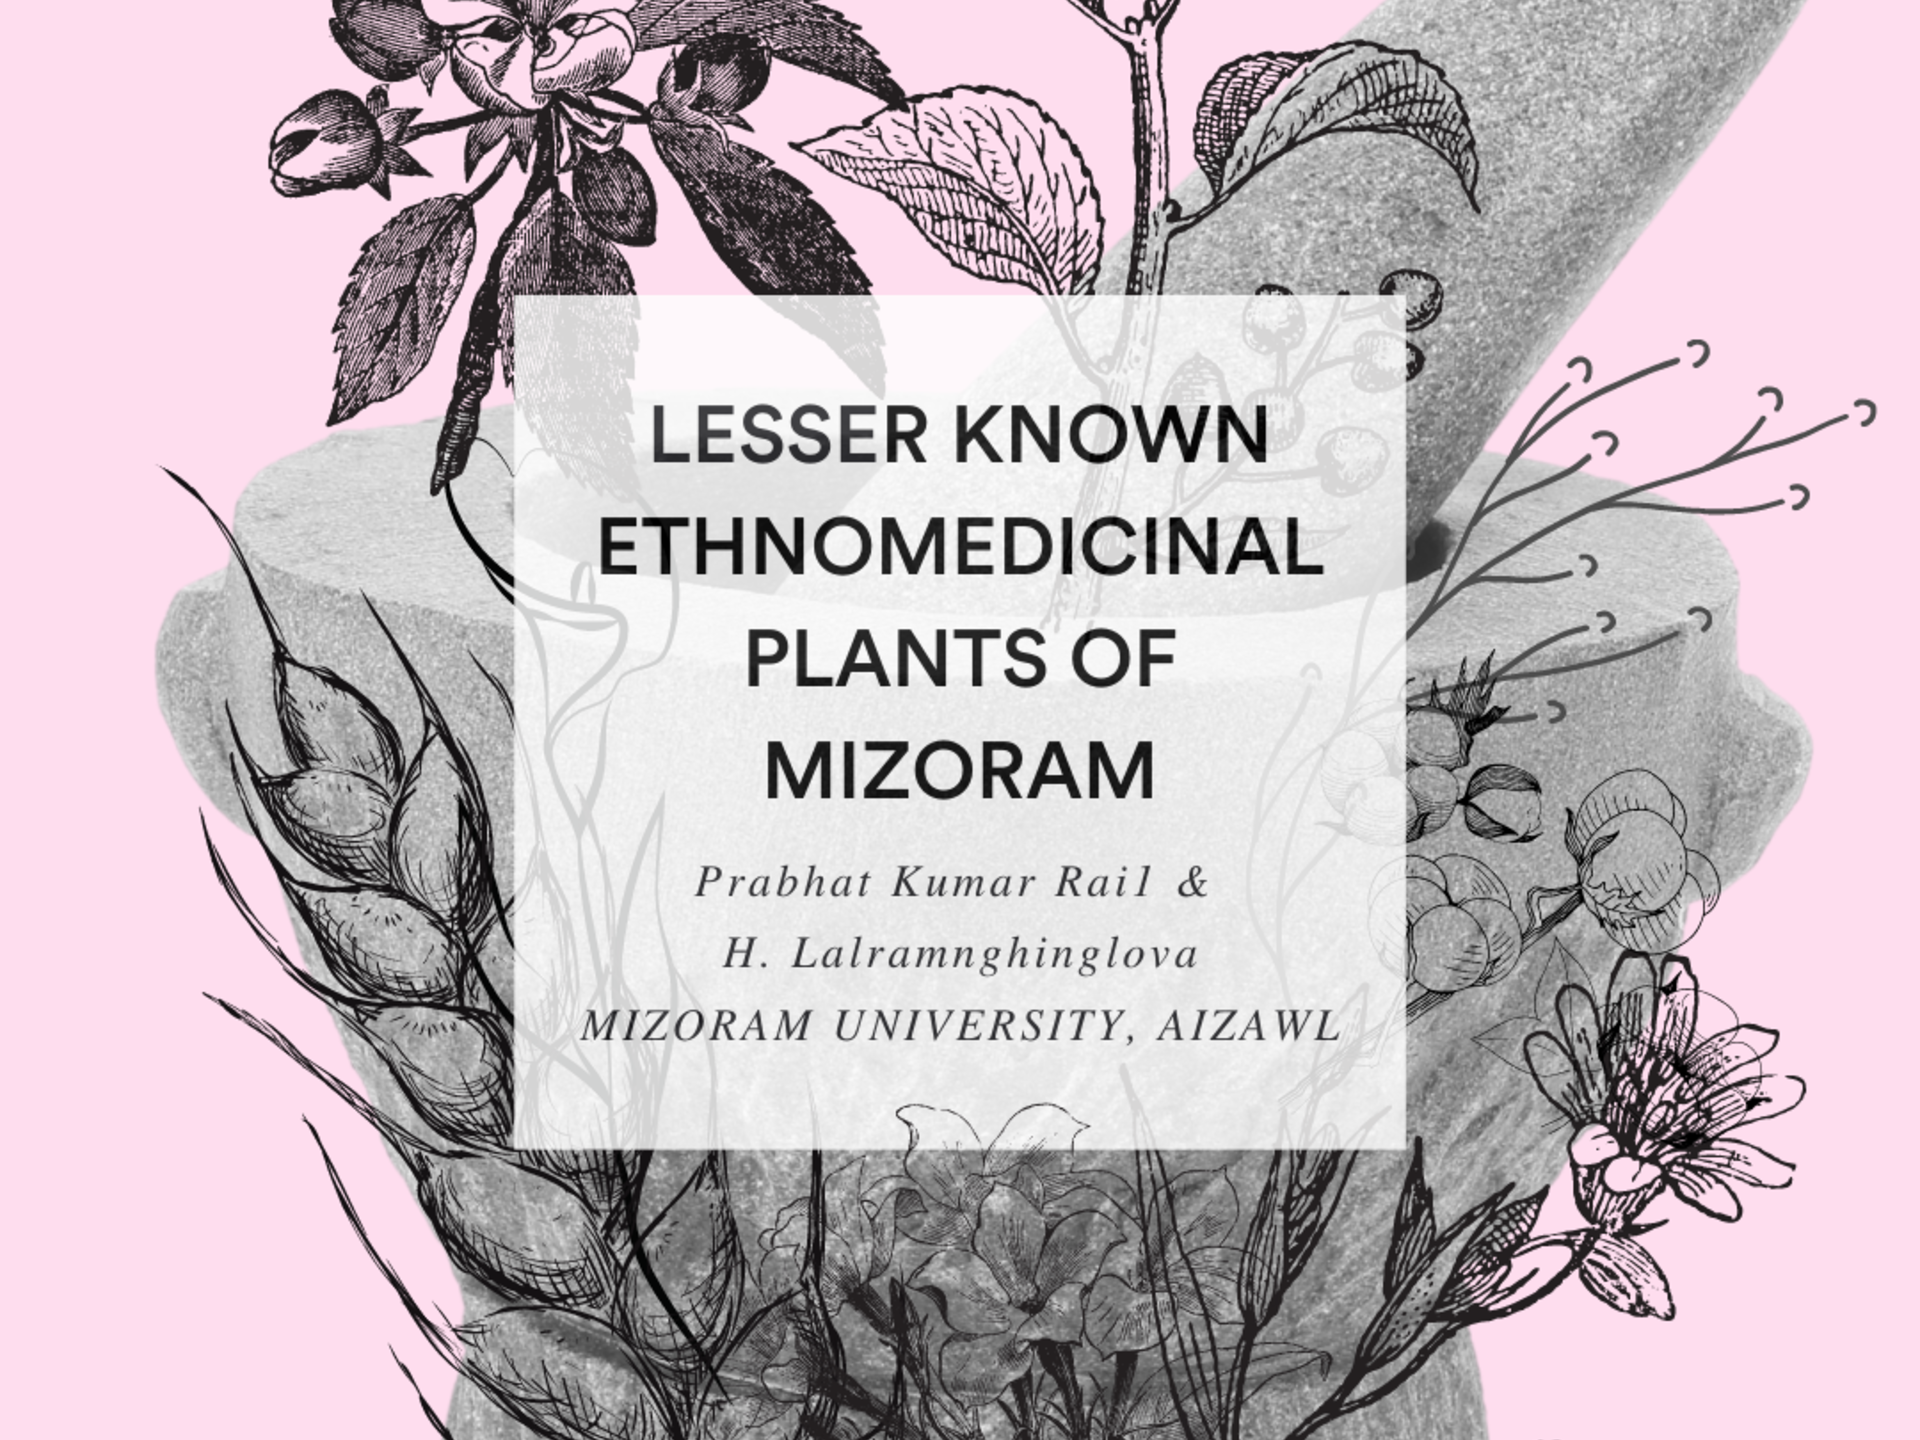 Lesser known Ethnomedicinal Plants of Mizoram